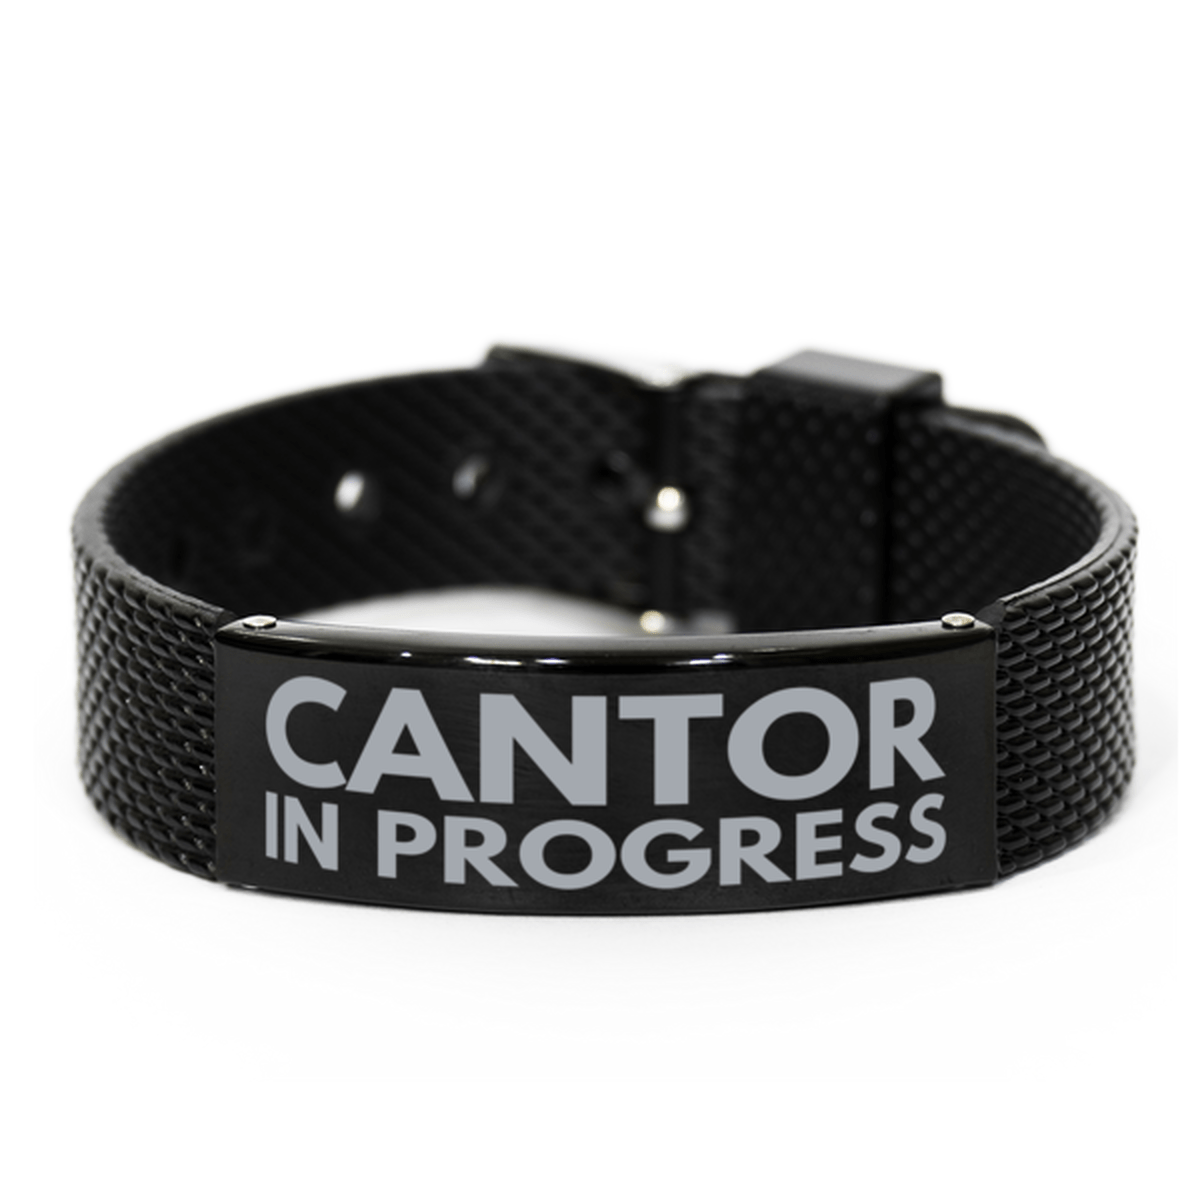 Inspirational Cantor Black Shark Mesh Bracelet, Cantor In Progress, Best Graduation Gifts for Students